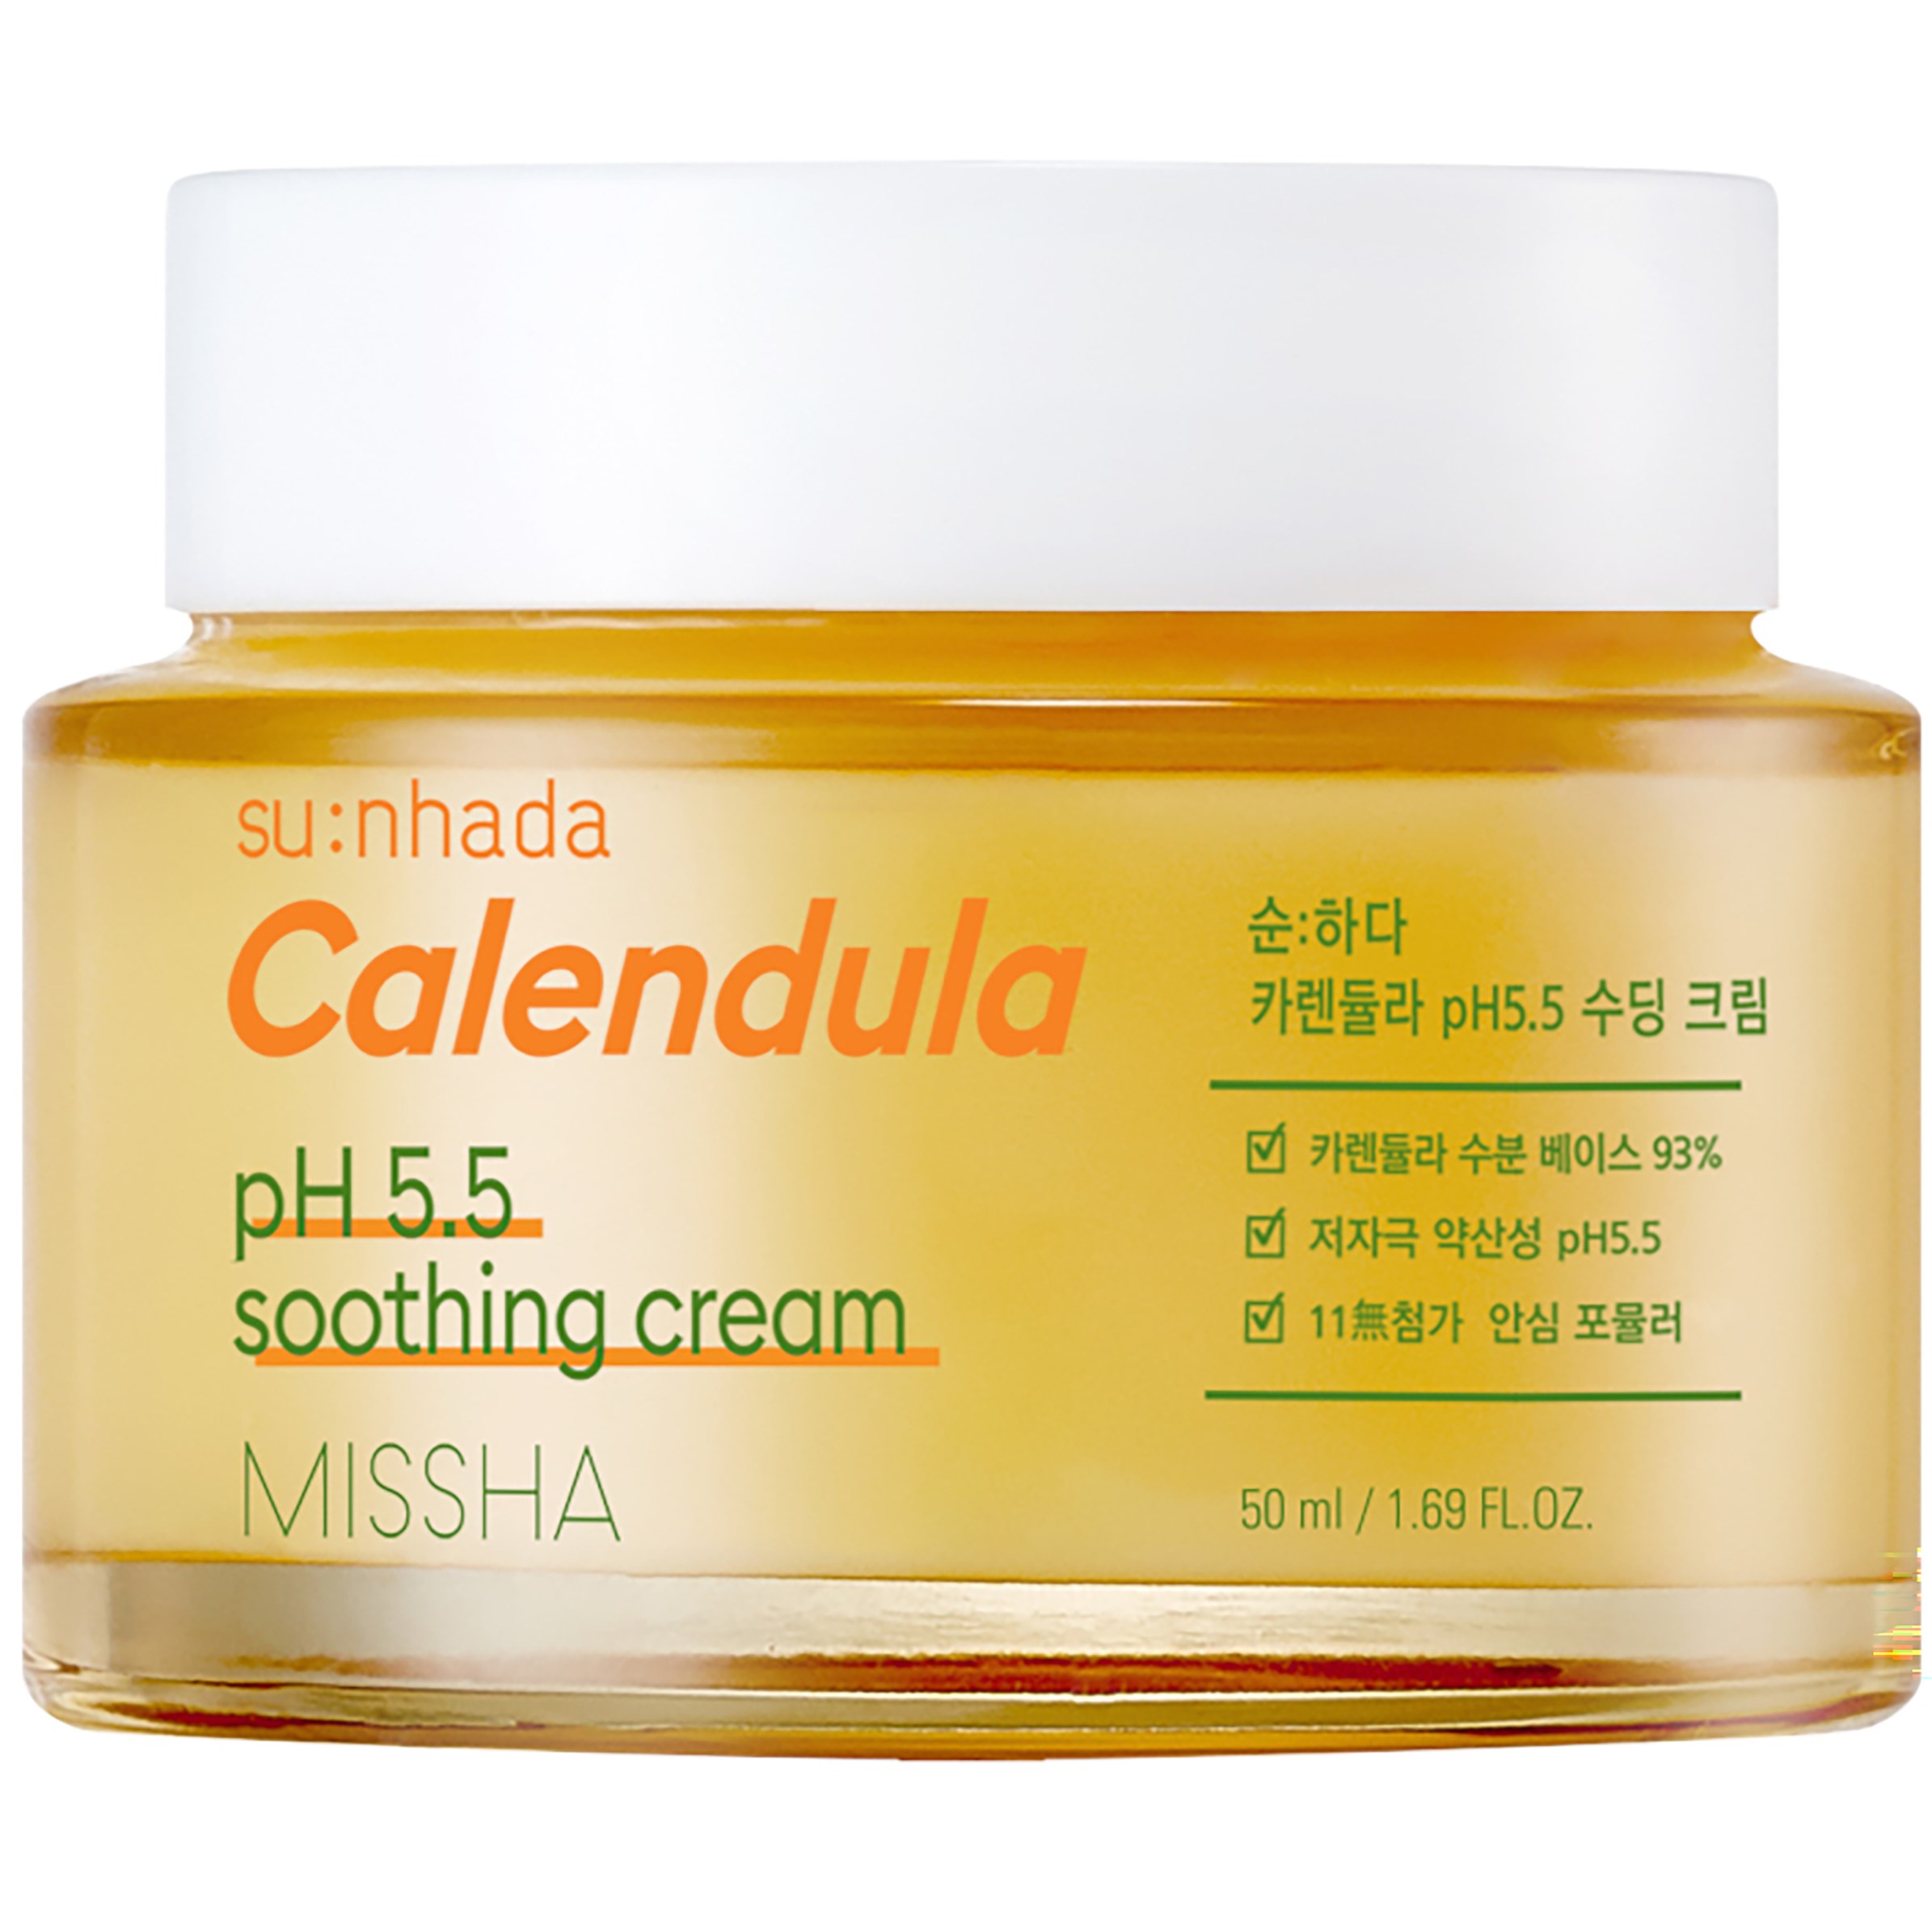 MISSHA Su:nhada Calendula pH 5.5 Soothing Cream 50 ml